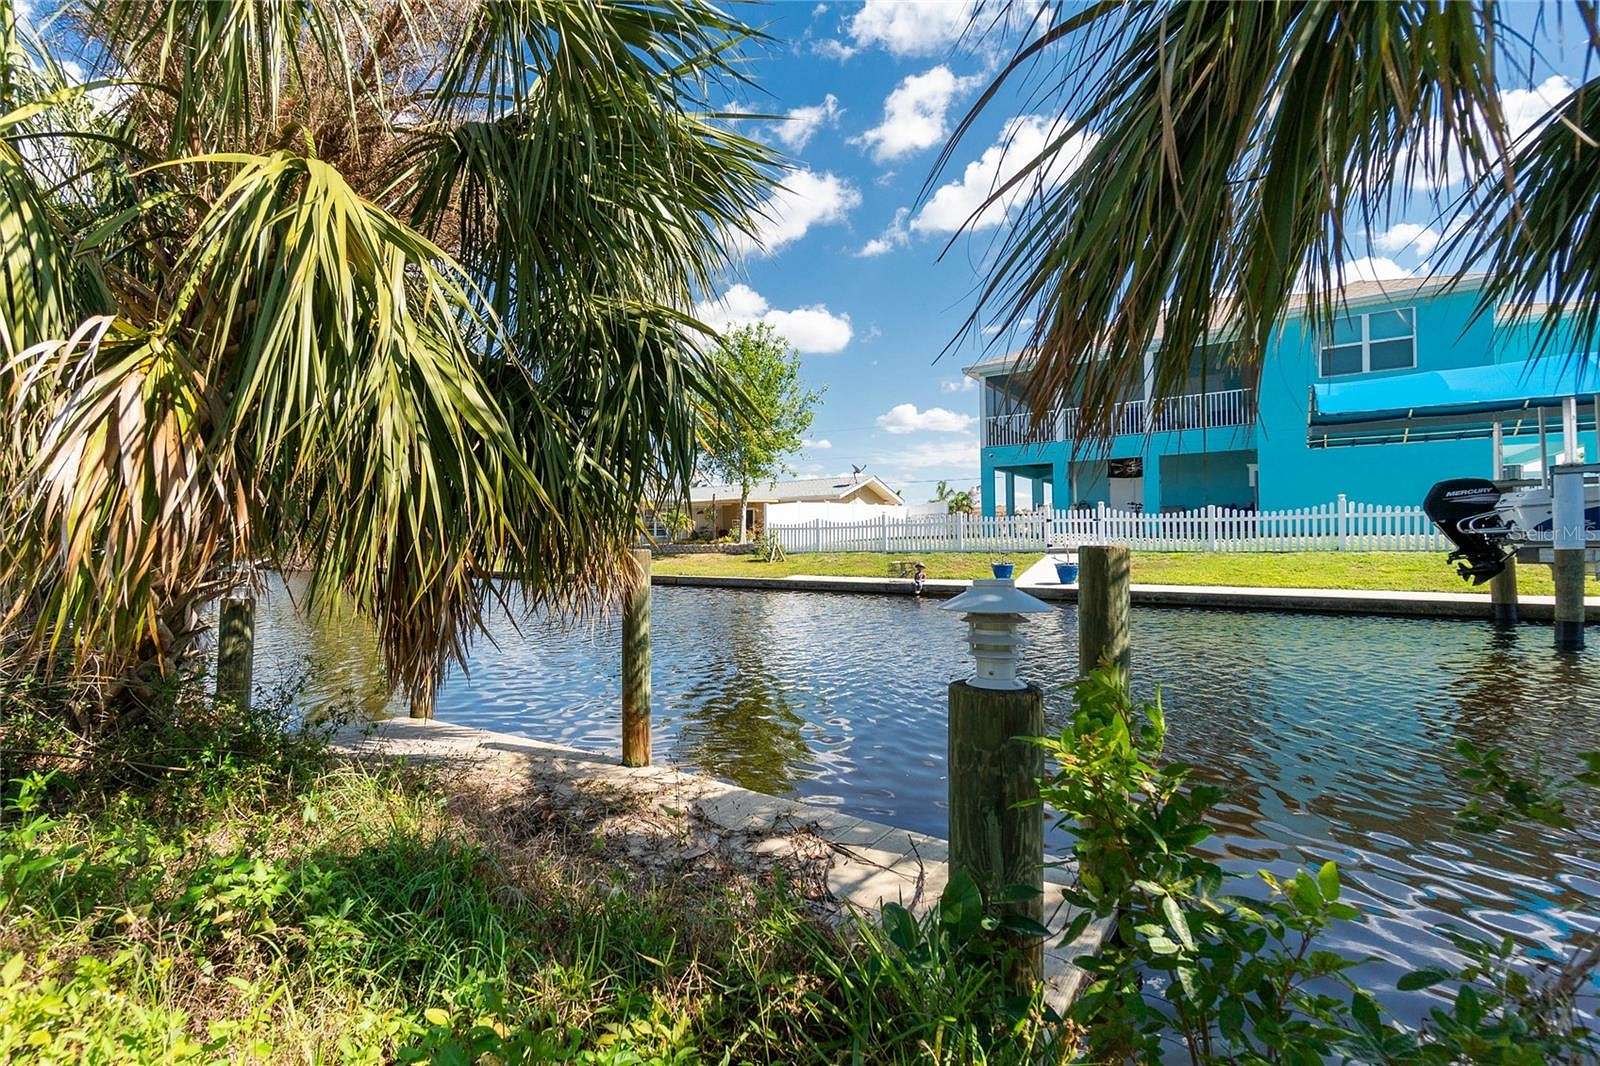 0.22 Acres of Residential Land for Sale in Punta Gorda, Florida